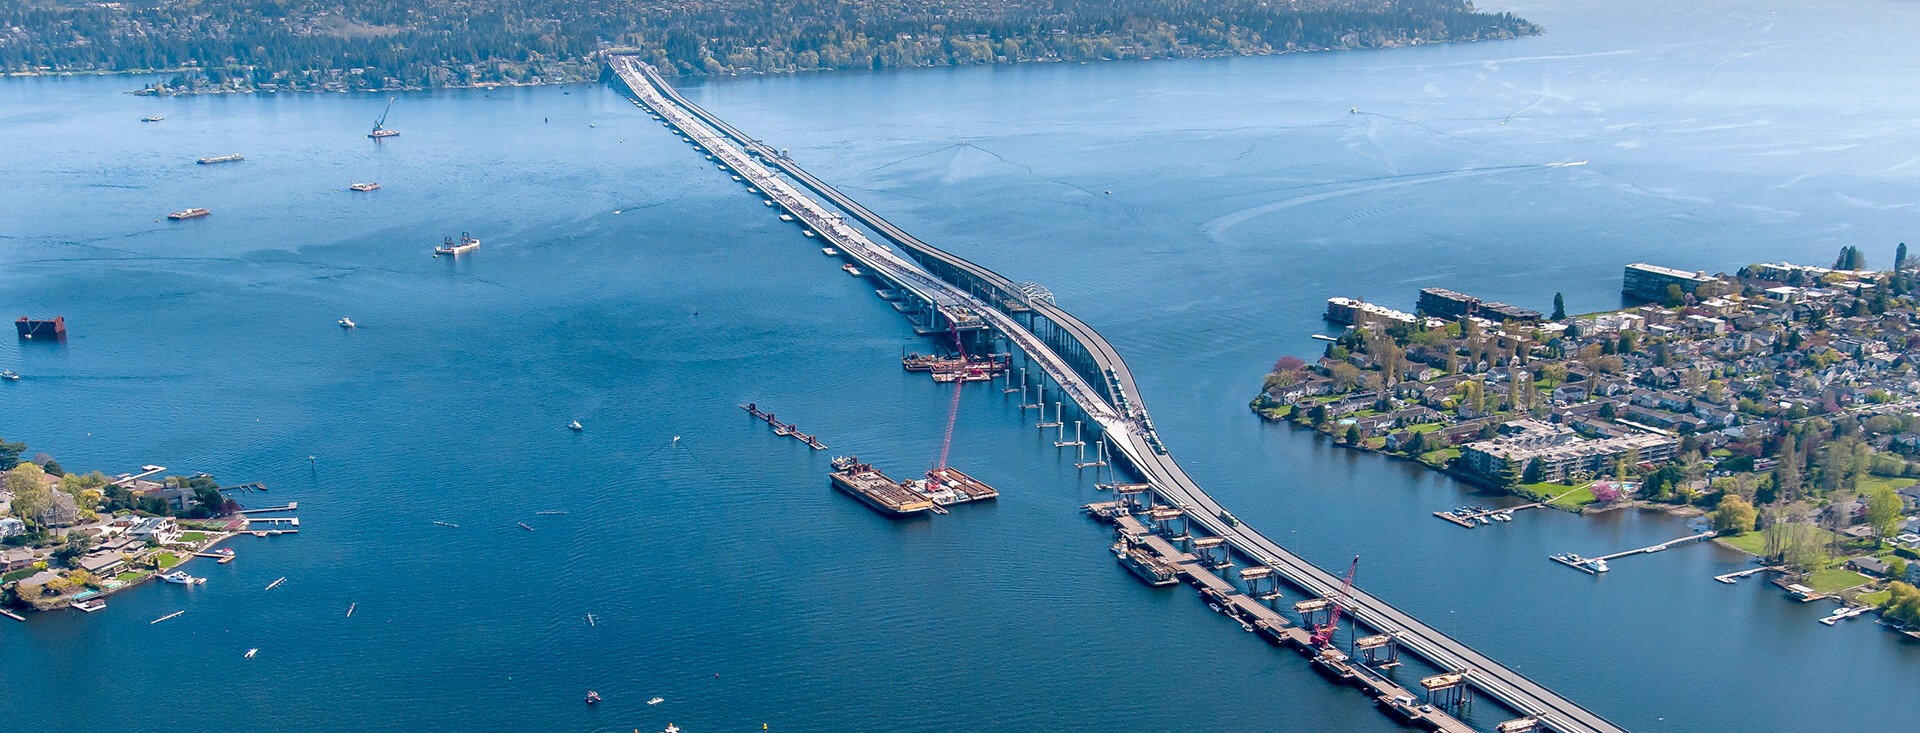 Photo of world's longest floating bridge in Seattle and Bellevue, Washington.